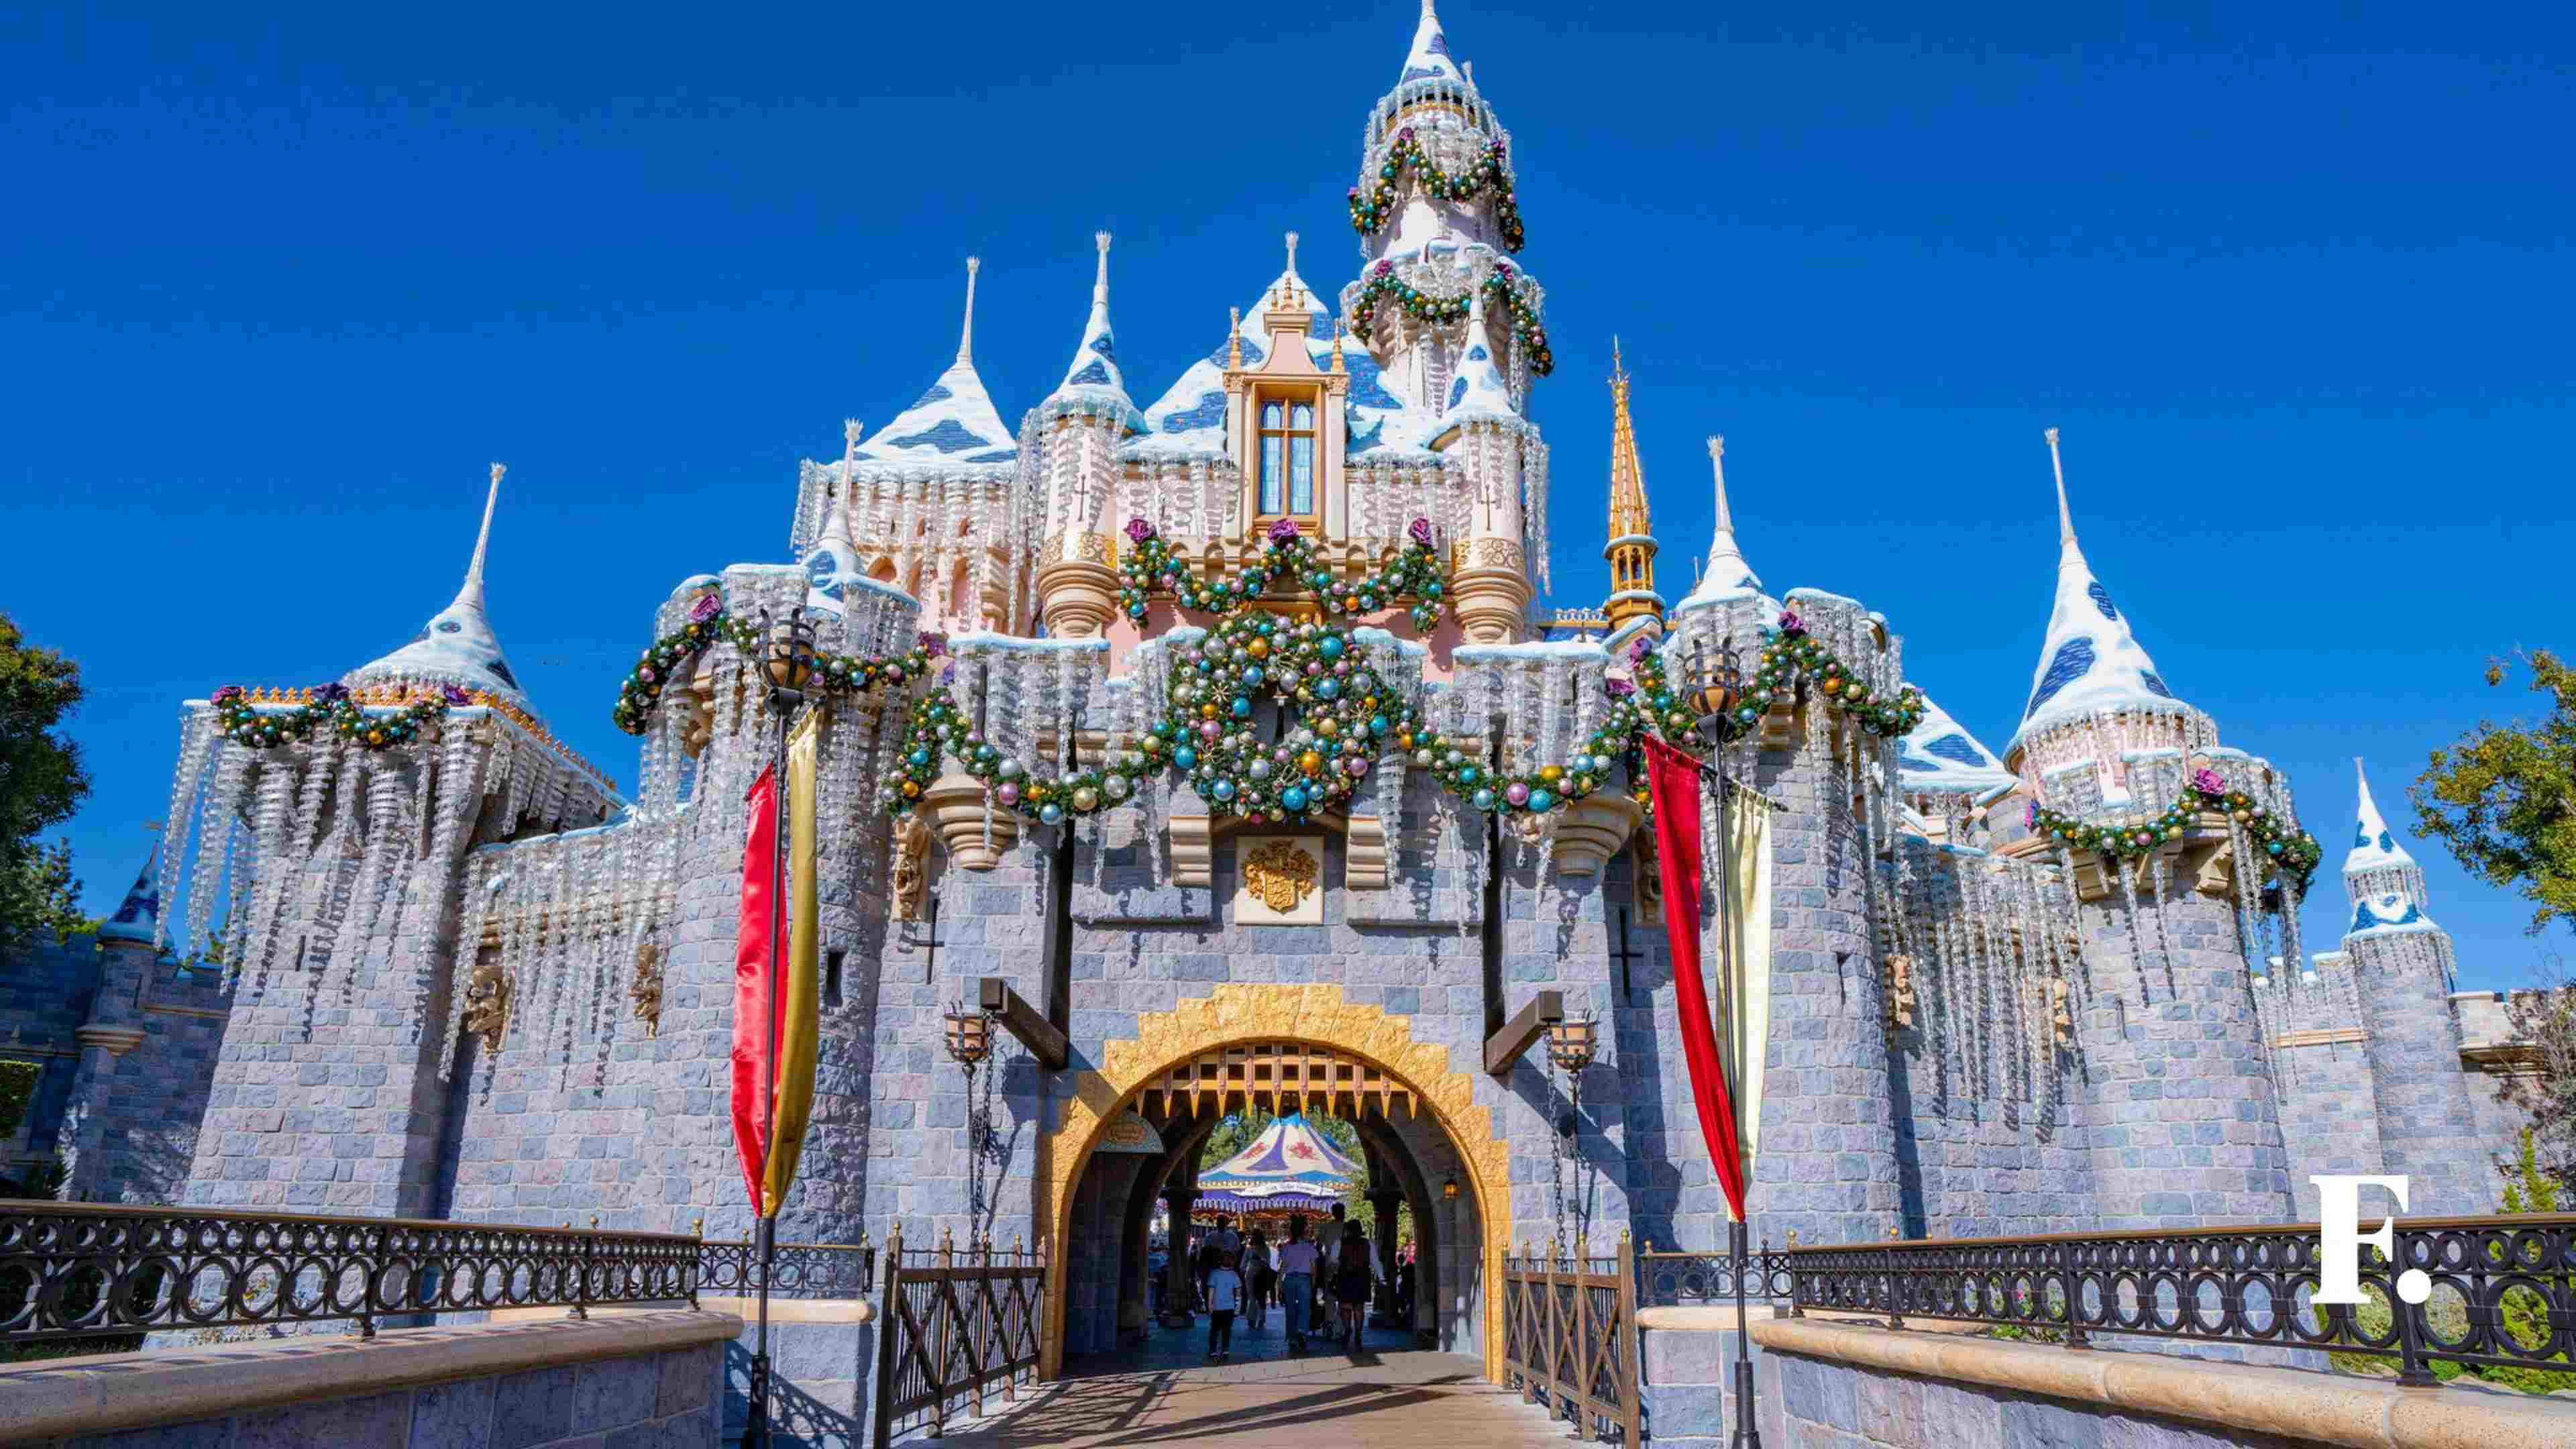 Le château de Disneyland.